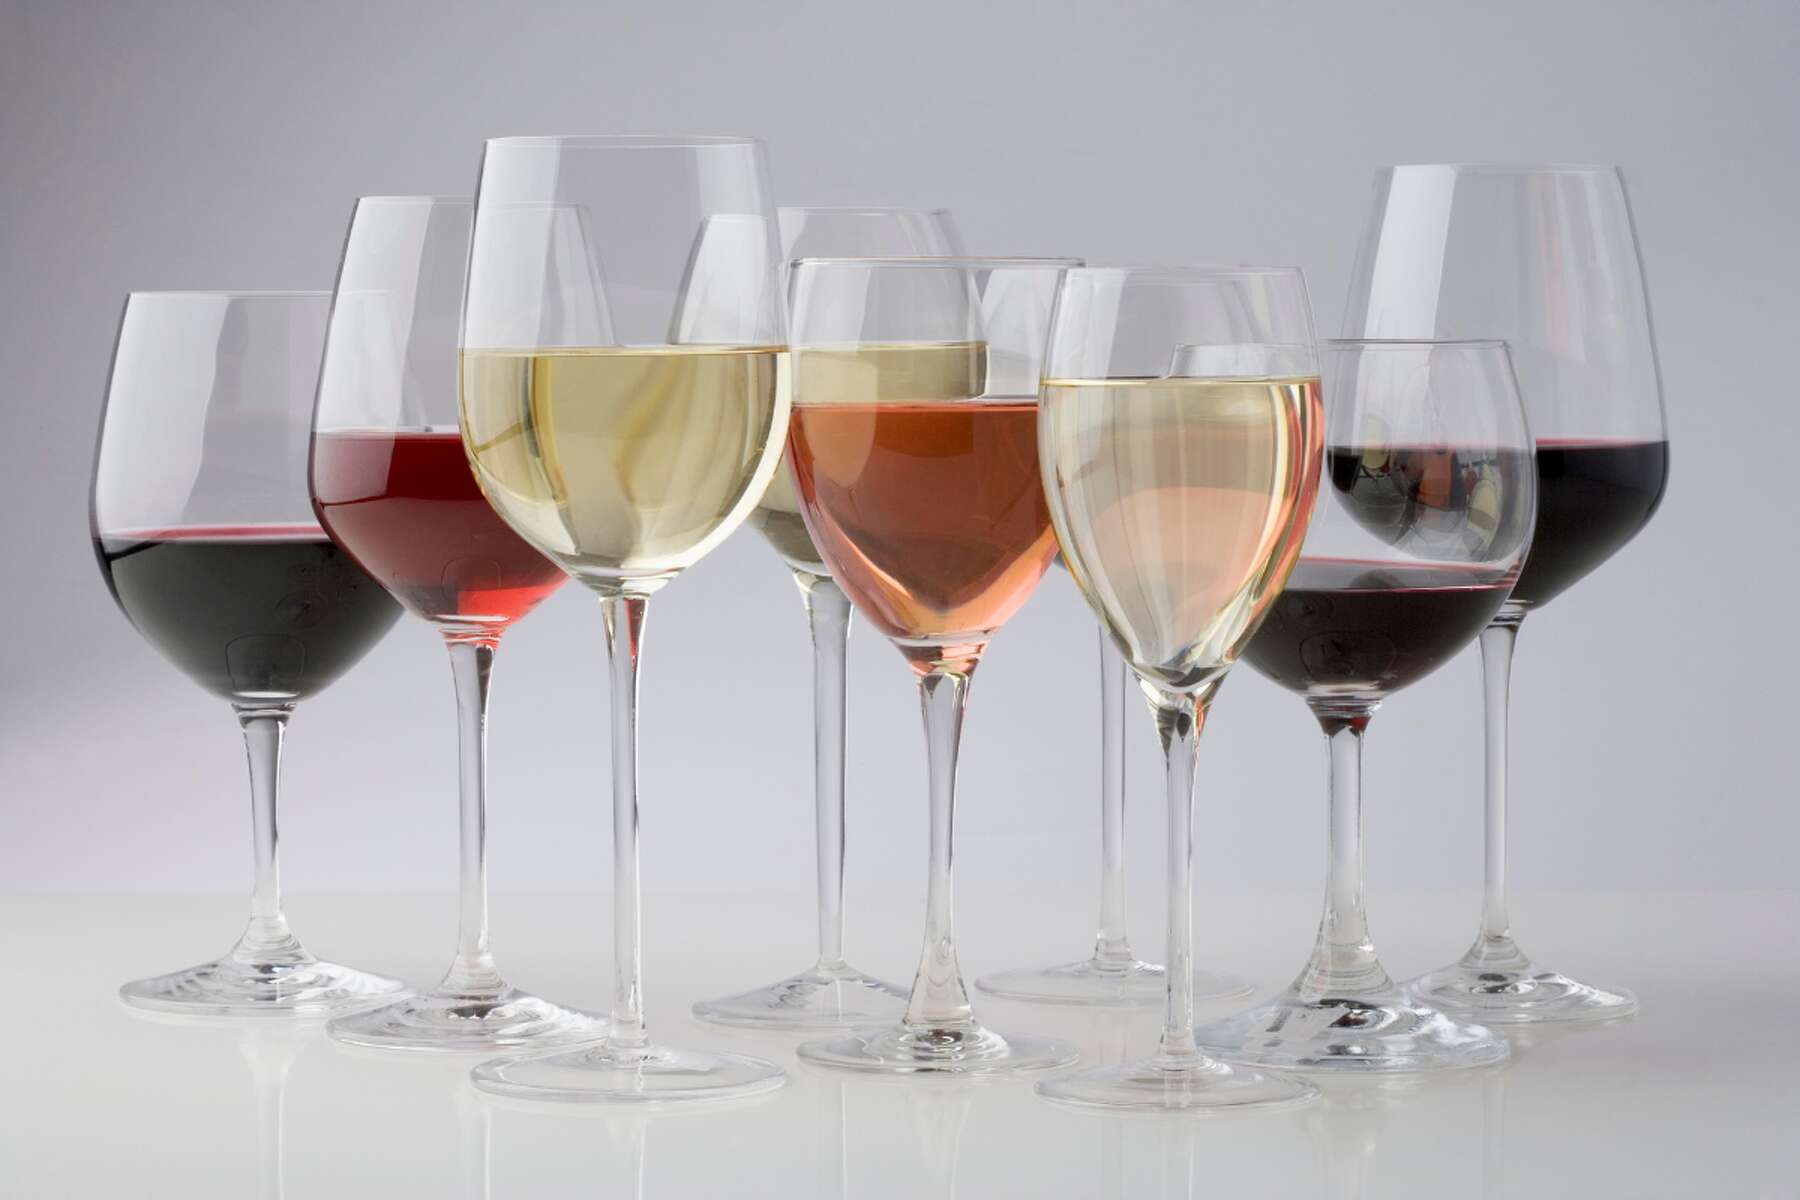 JBHO Hand Blown Italian Style Crystal Bordeaux Wine Glasses